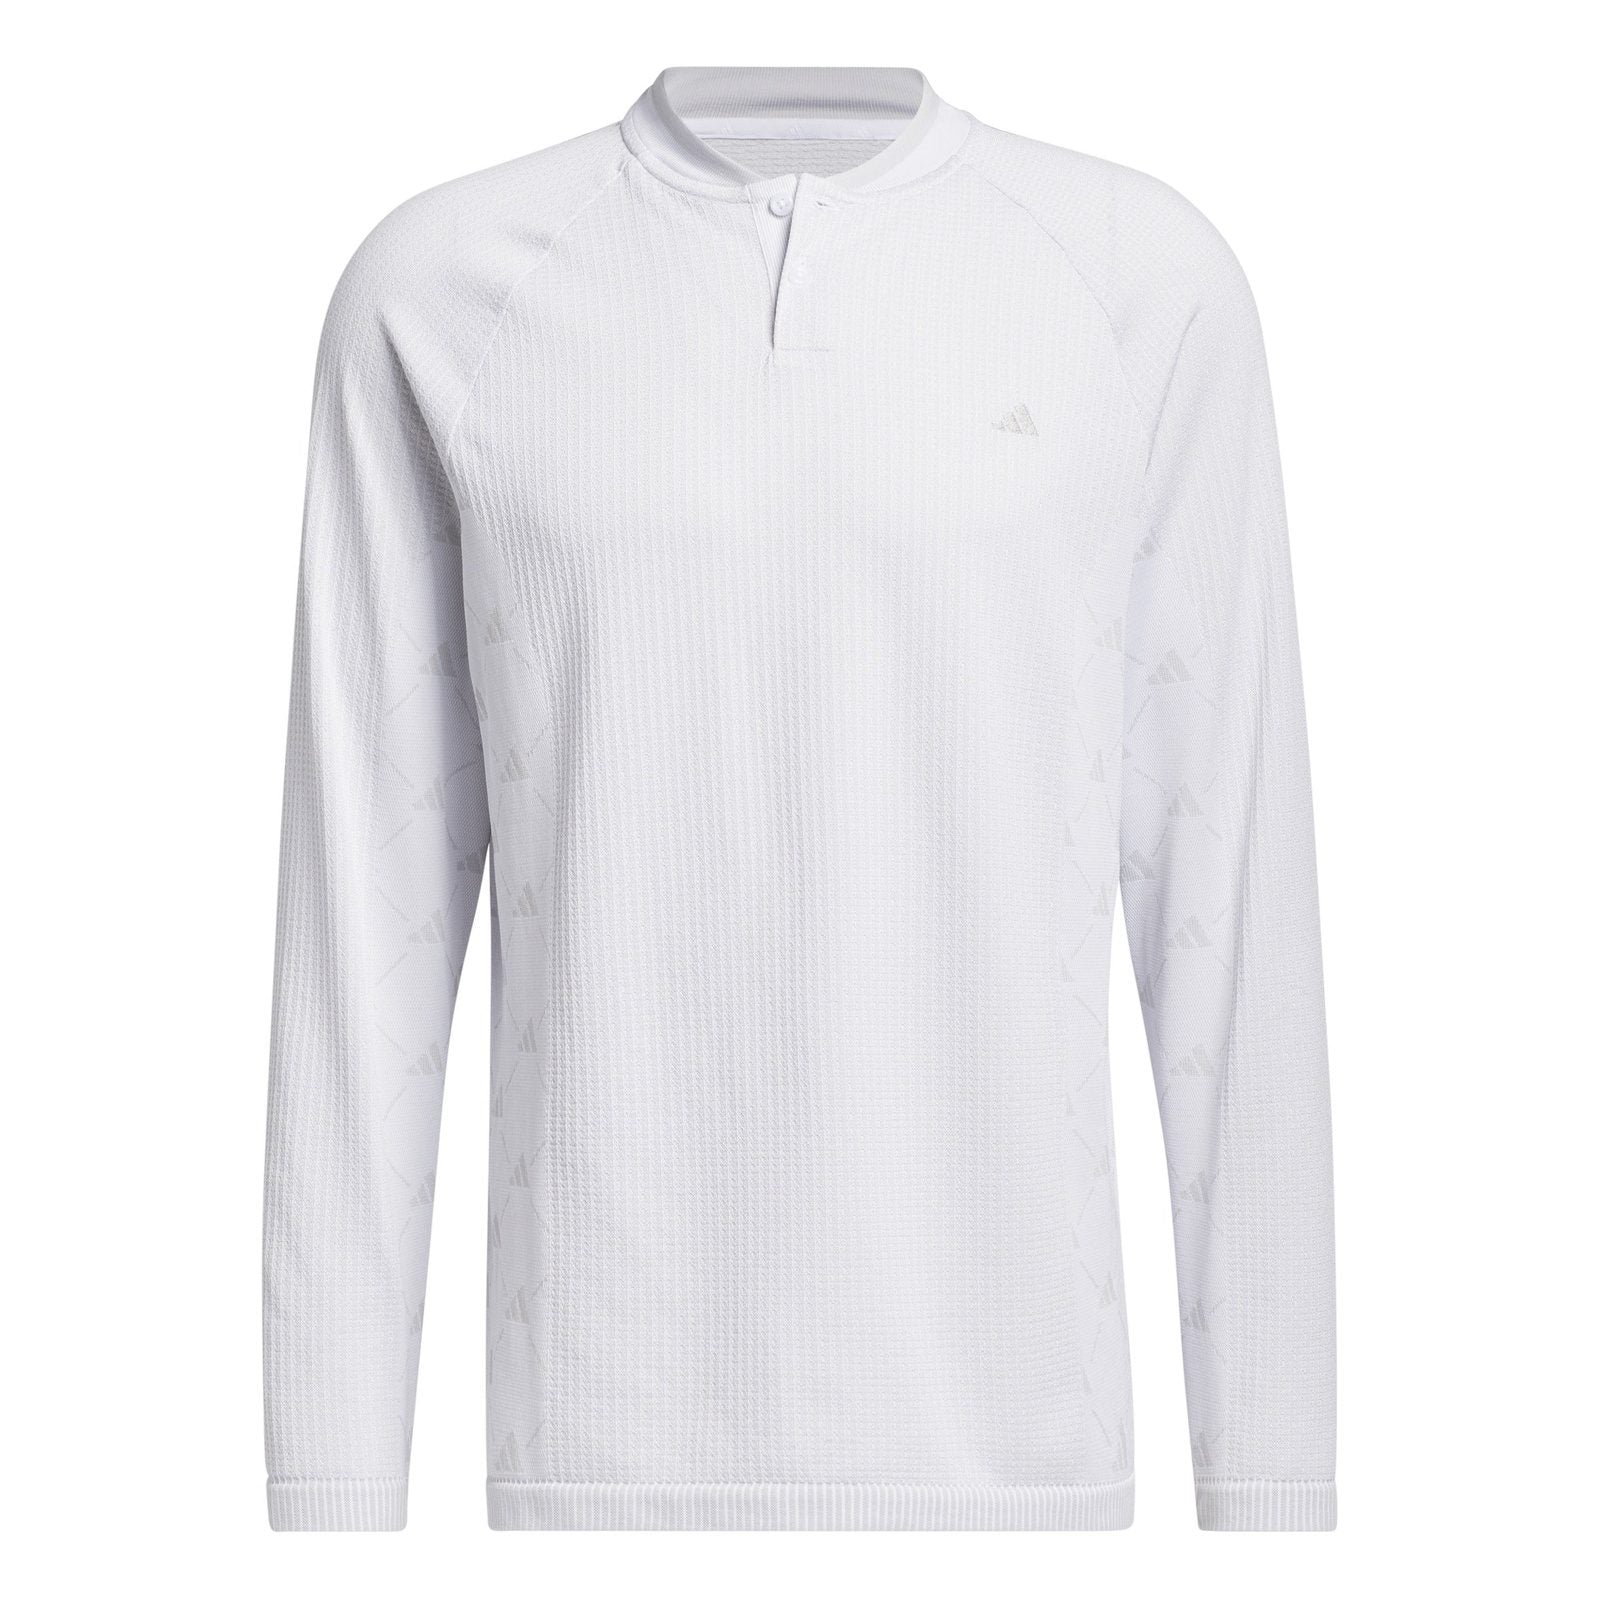 adidas Ultimate365 Tour Primeknit Long Sleeve Golf Shirt IL9637